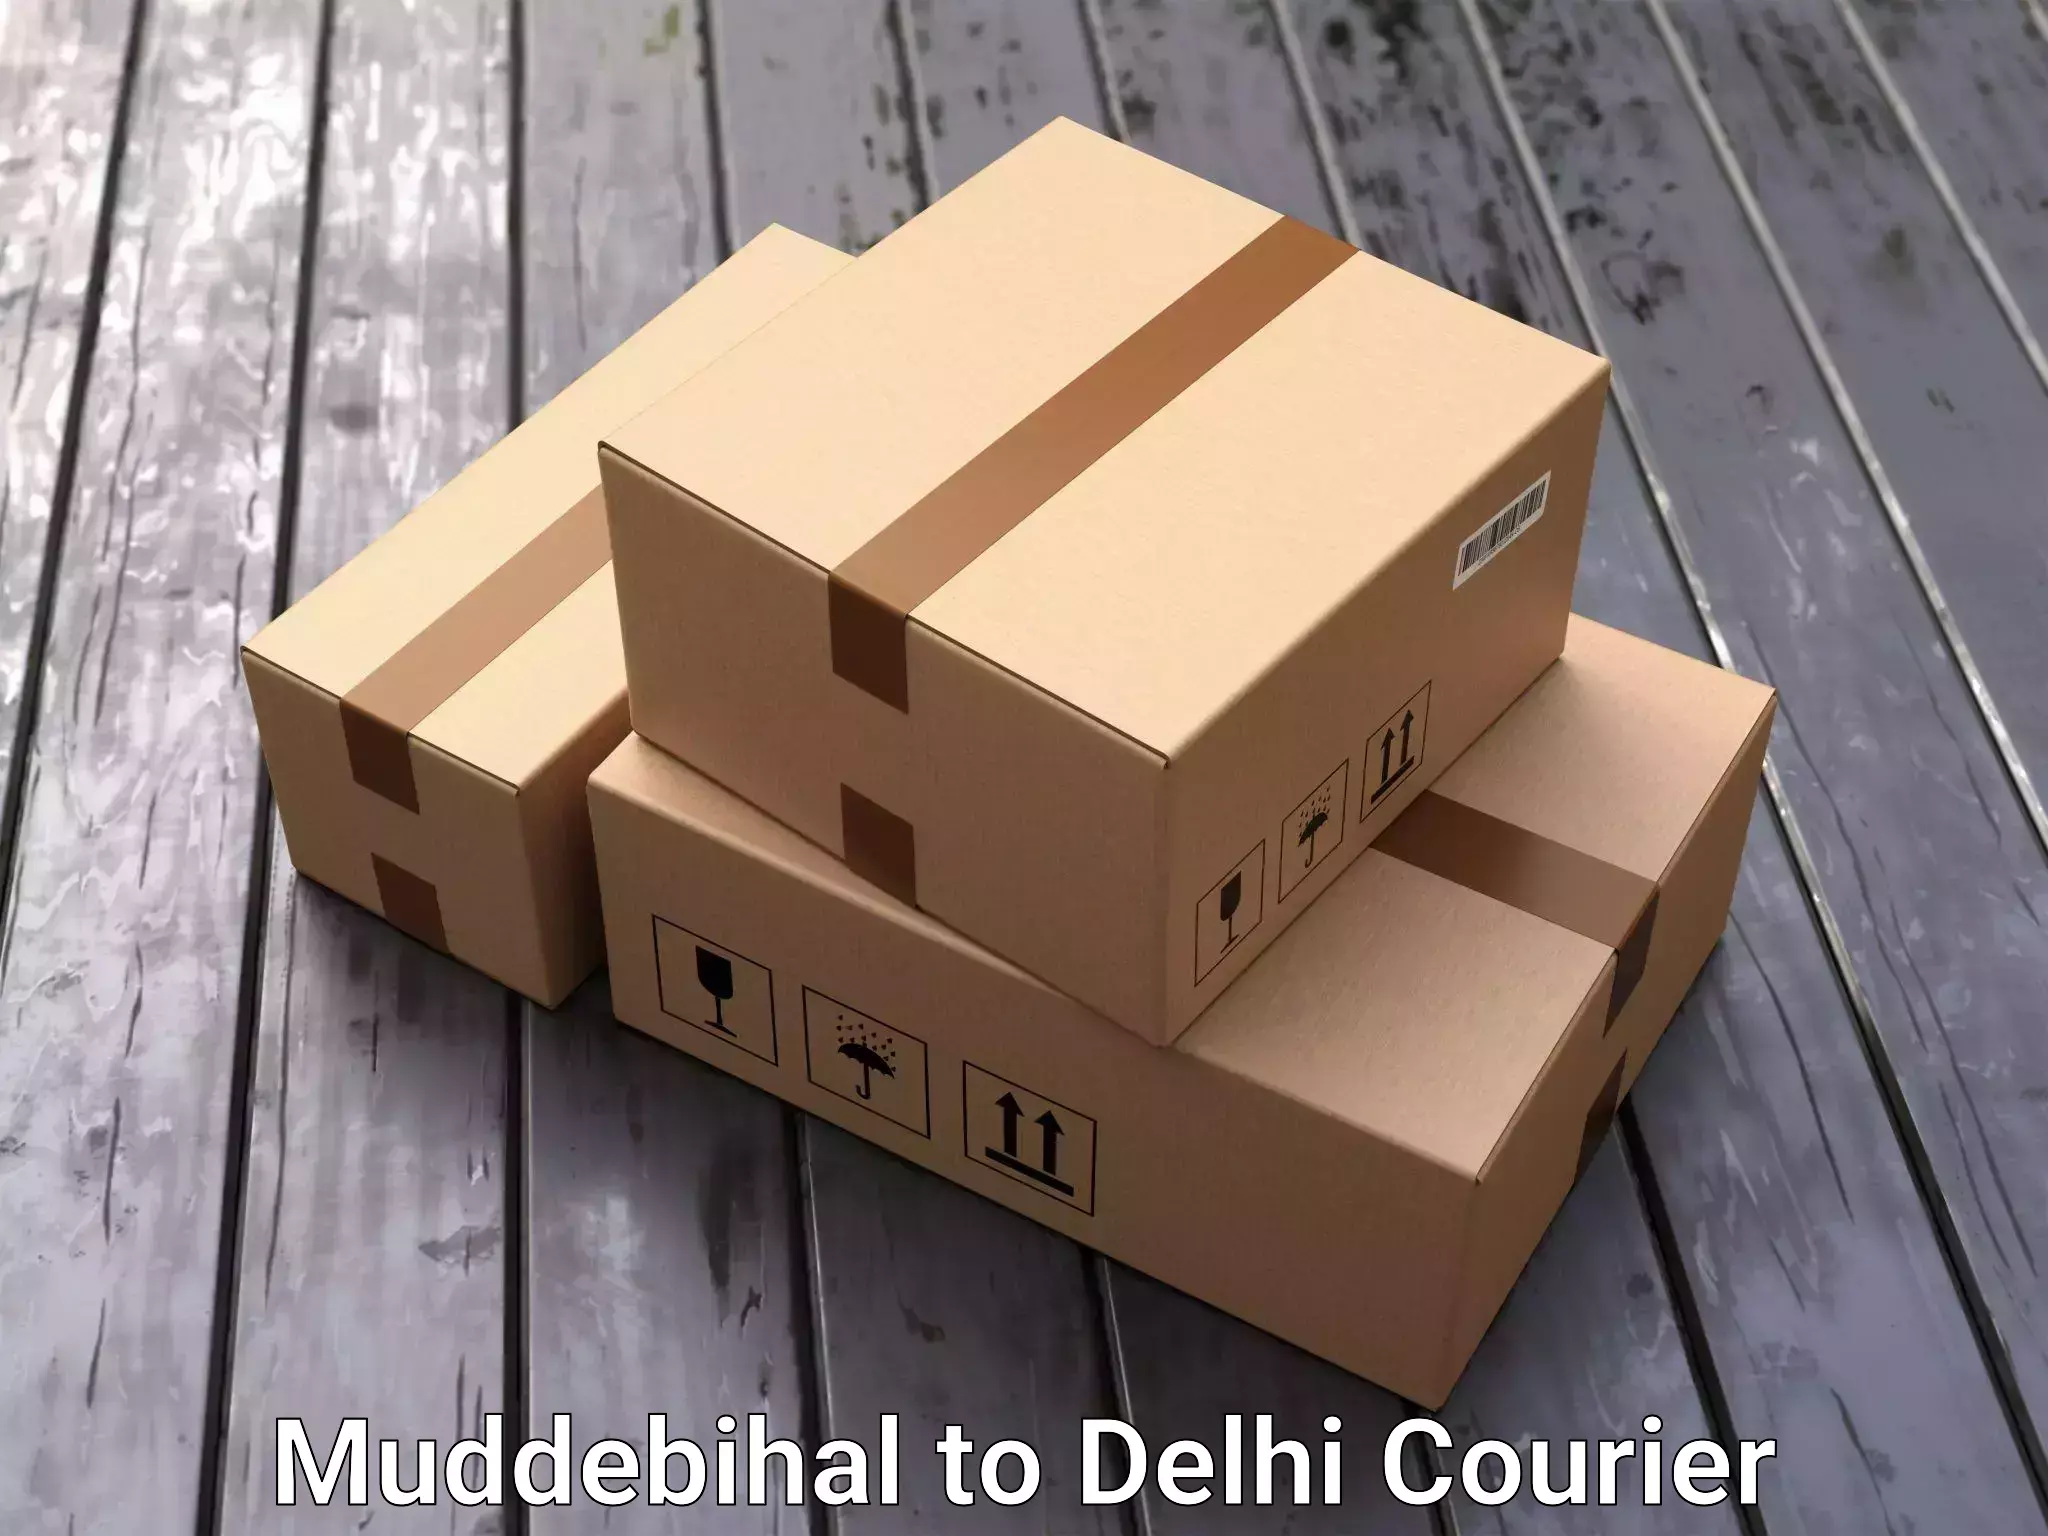 Efficient moving company Muddebihal to Delhi